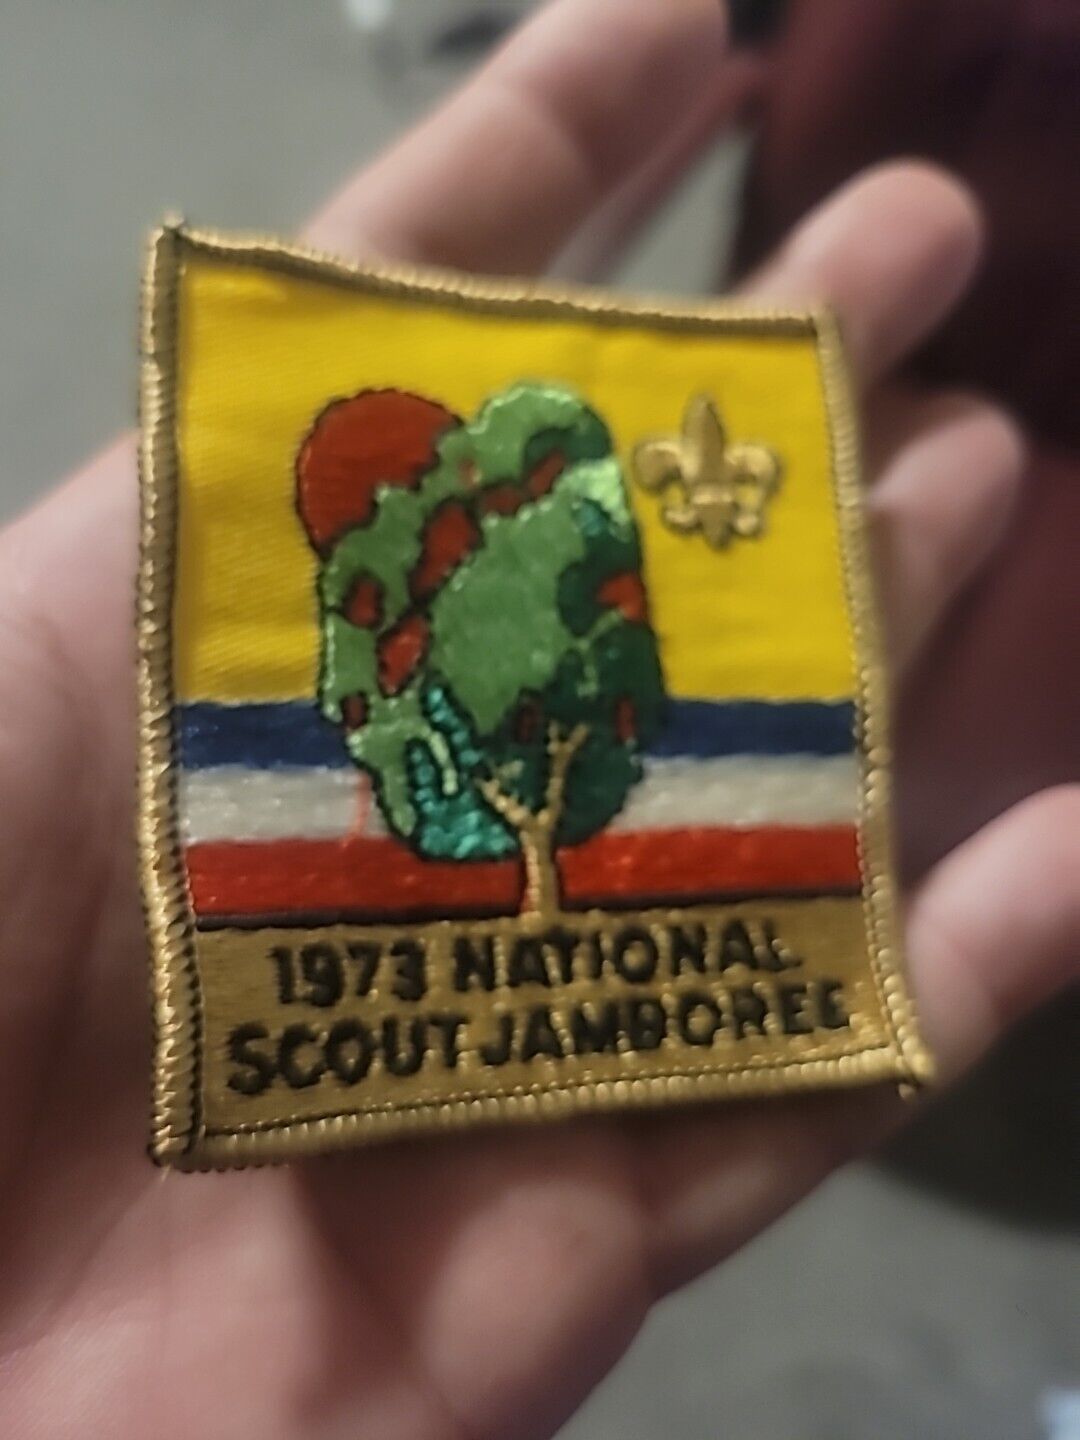 1973 National Jamboree pocket patch   